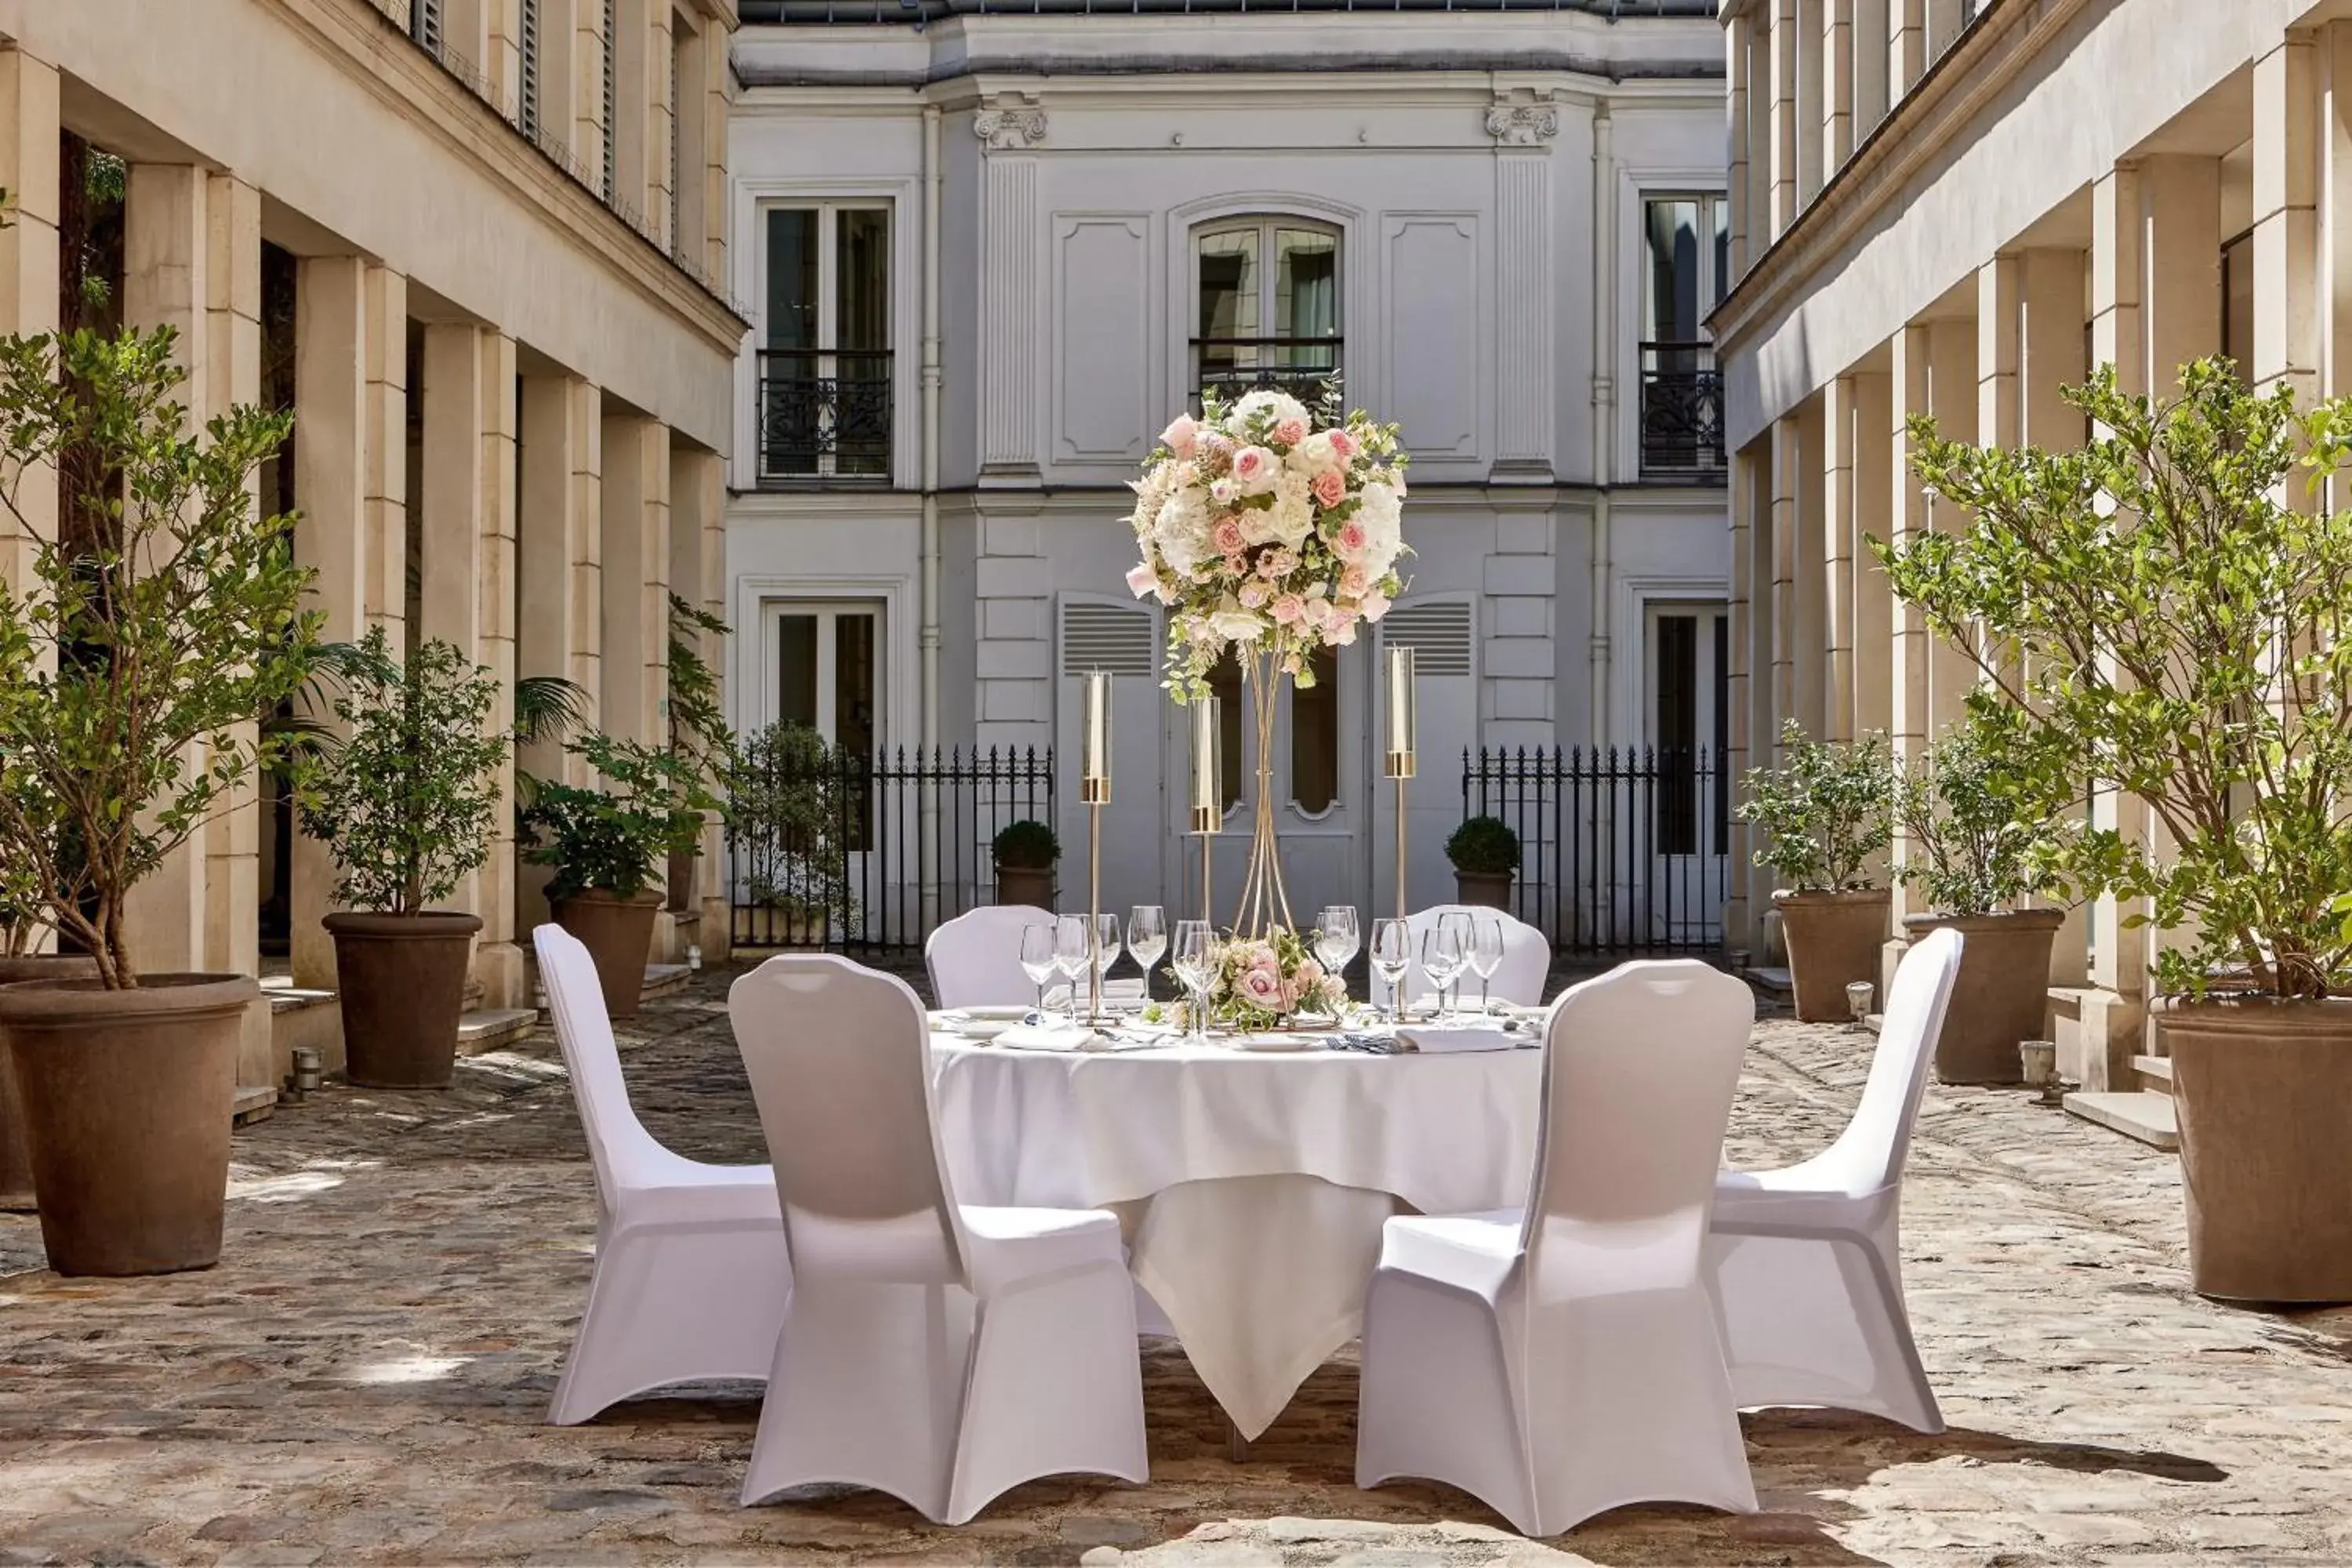 Banquet/Function facilities, Banquet Facilities in Paris Marriott Champs Elysees Hotel